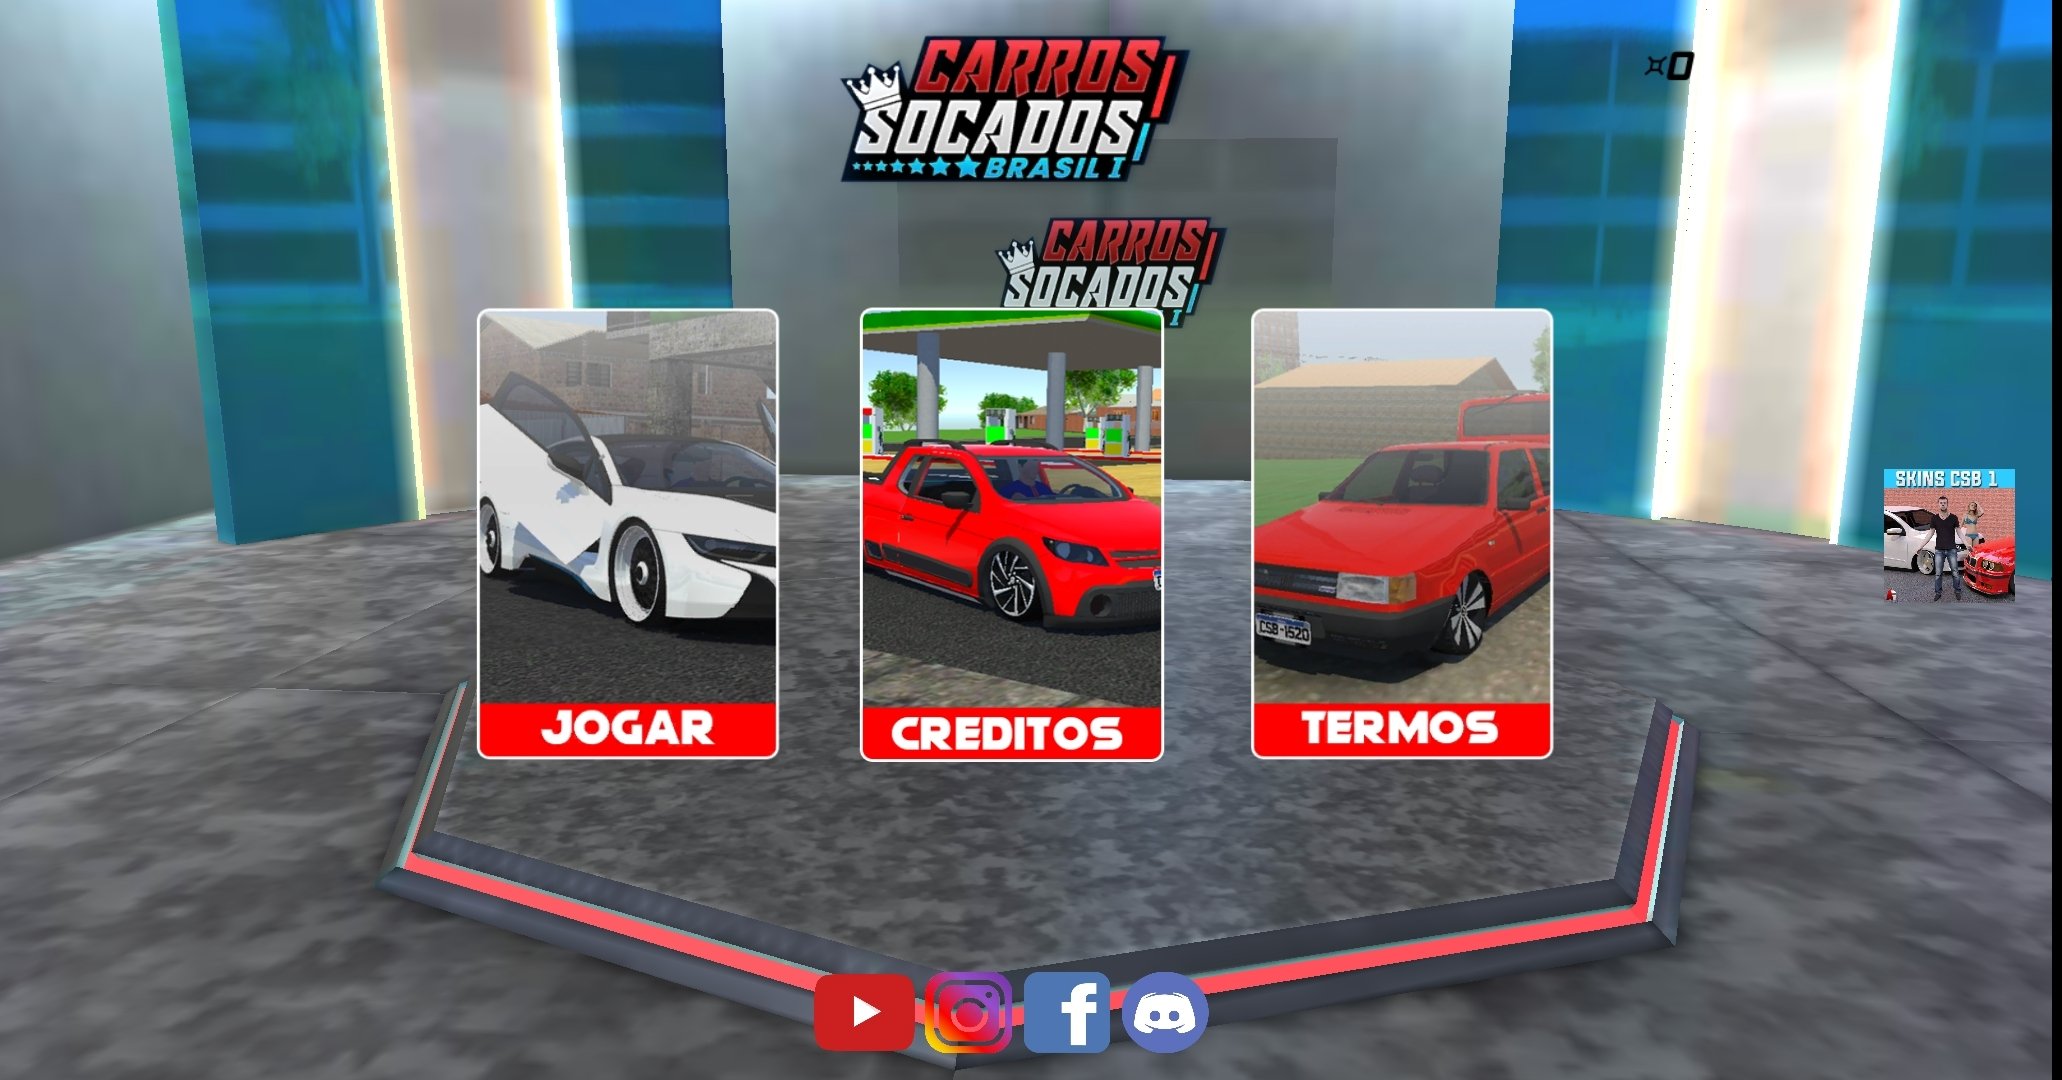 Carros Socados Brasil - Apps on Google Play